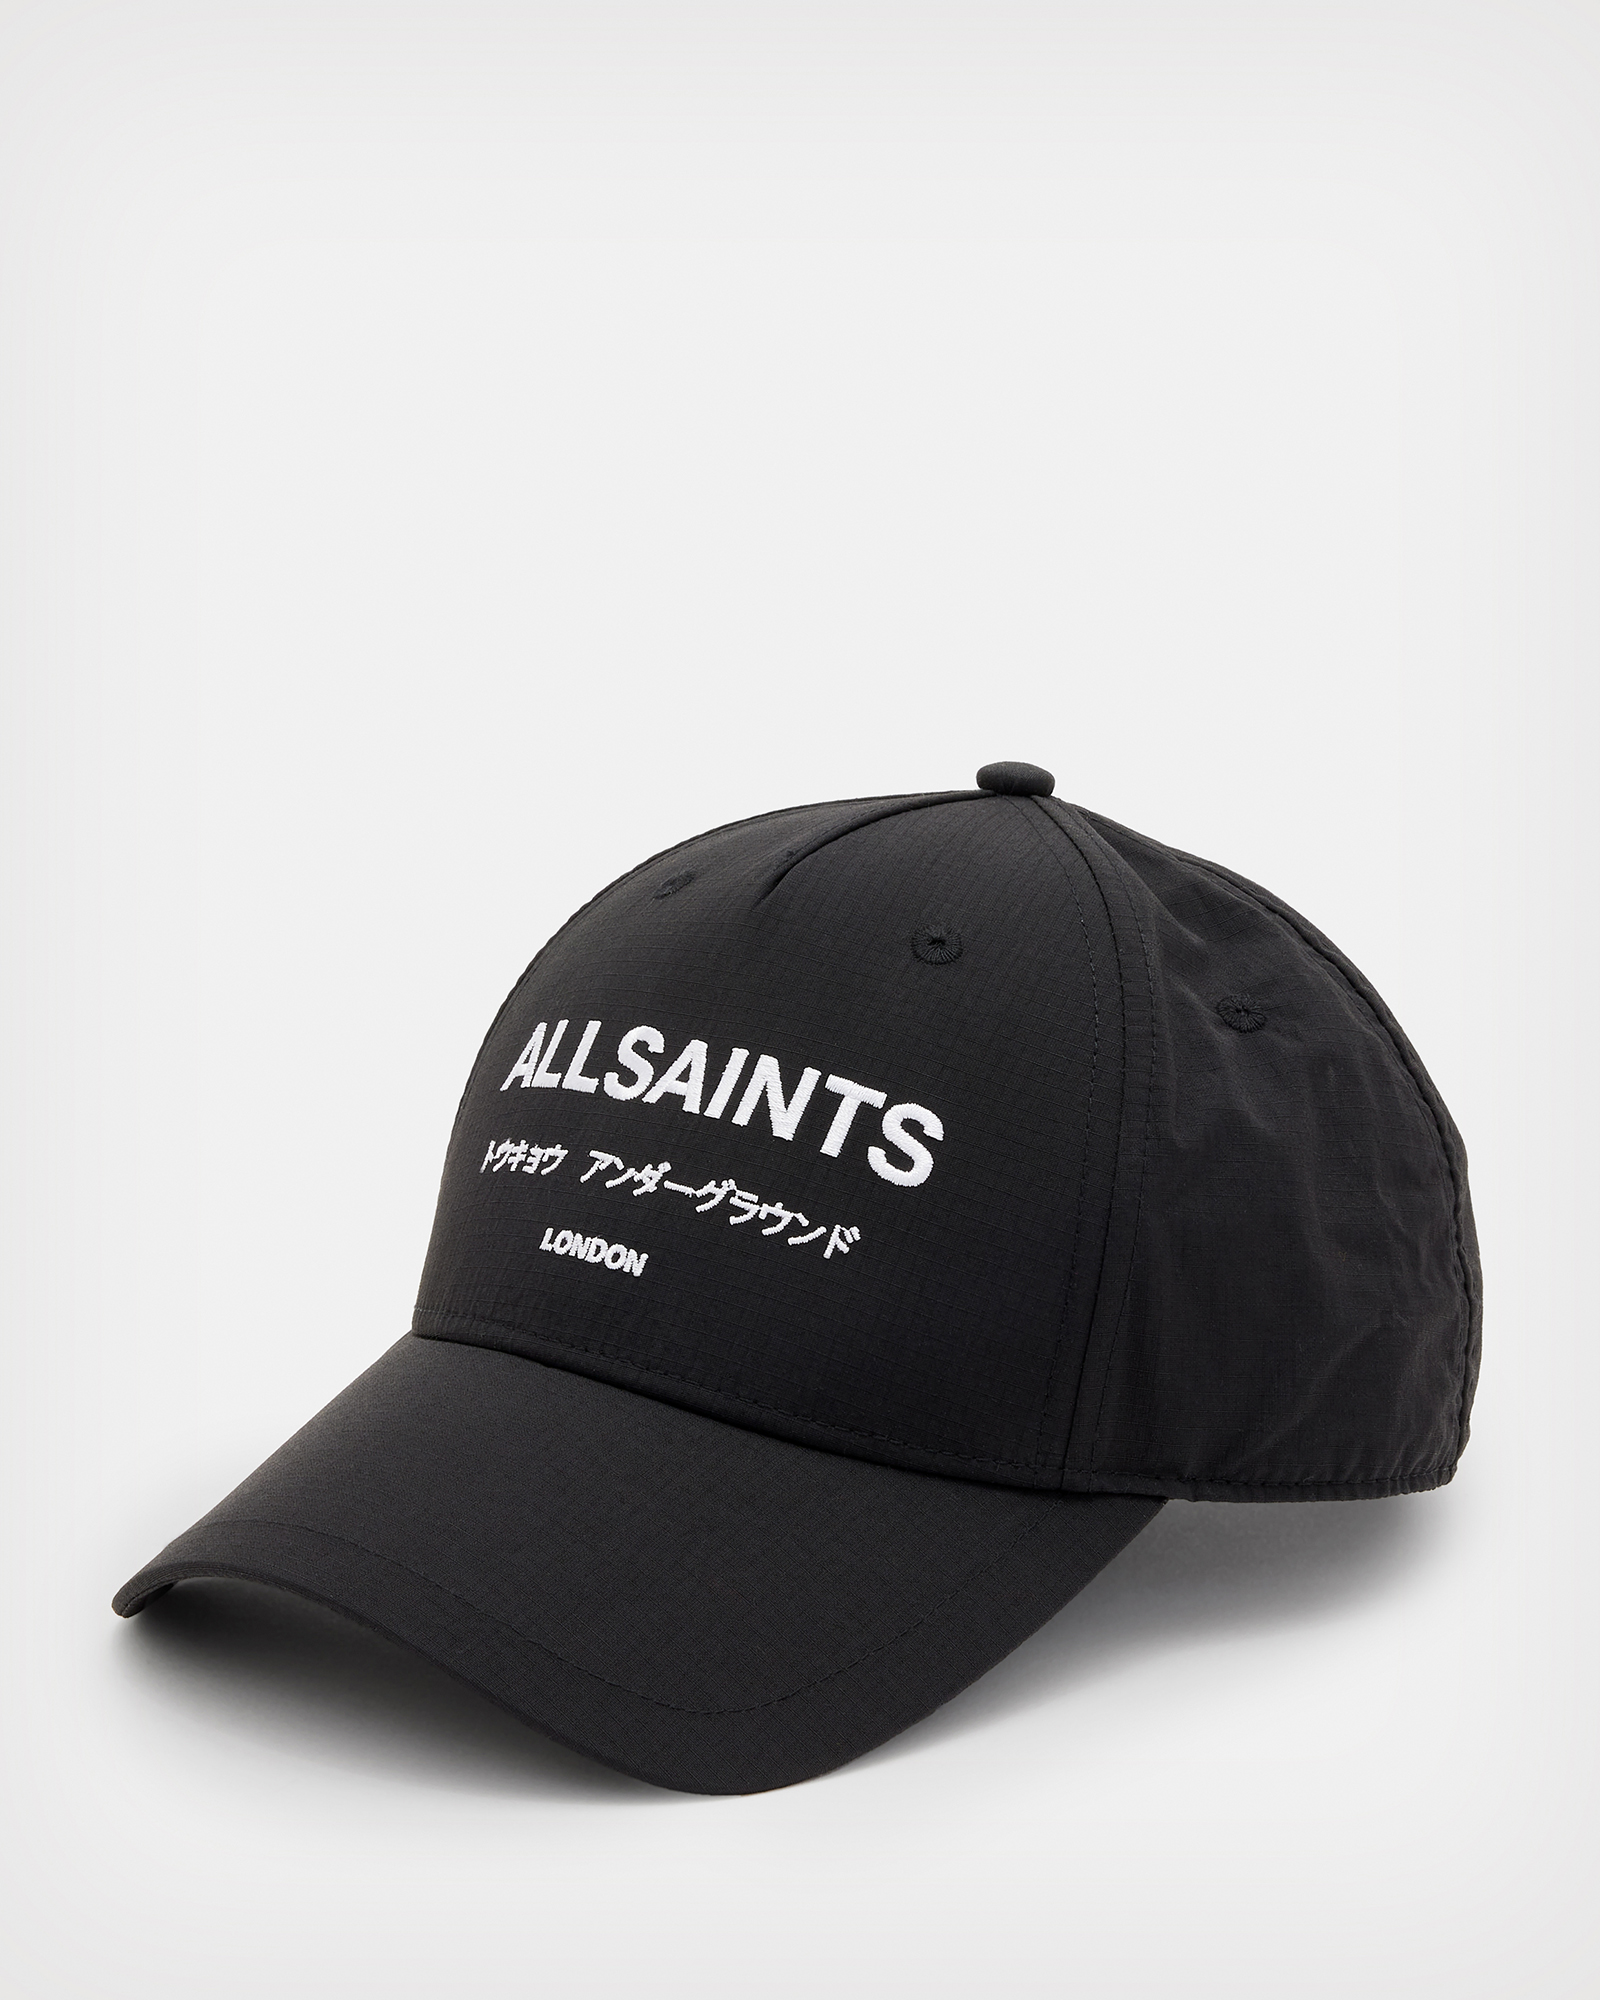 AllSaints Underground Nylon Baseball Cap,, Black